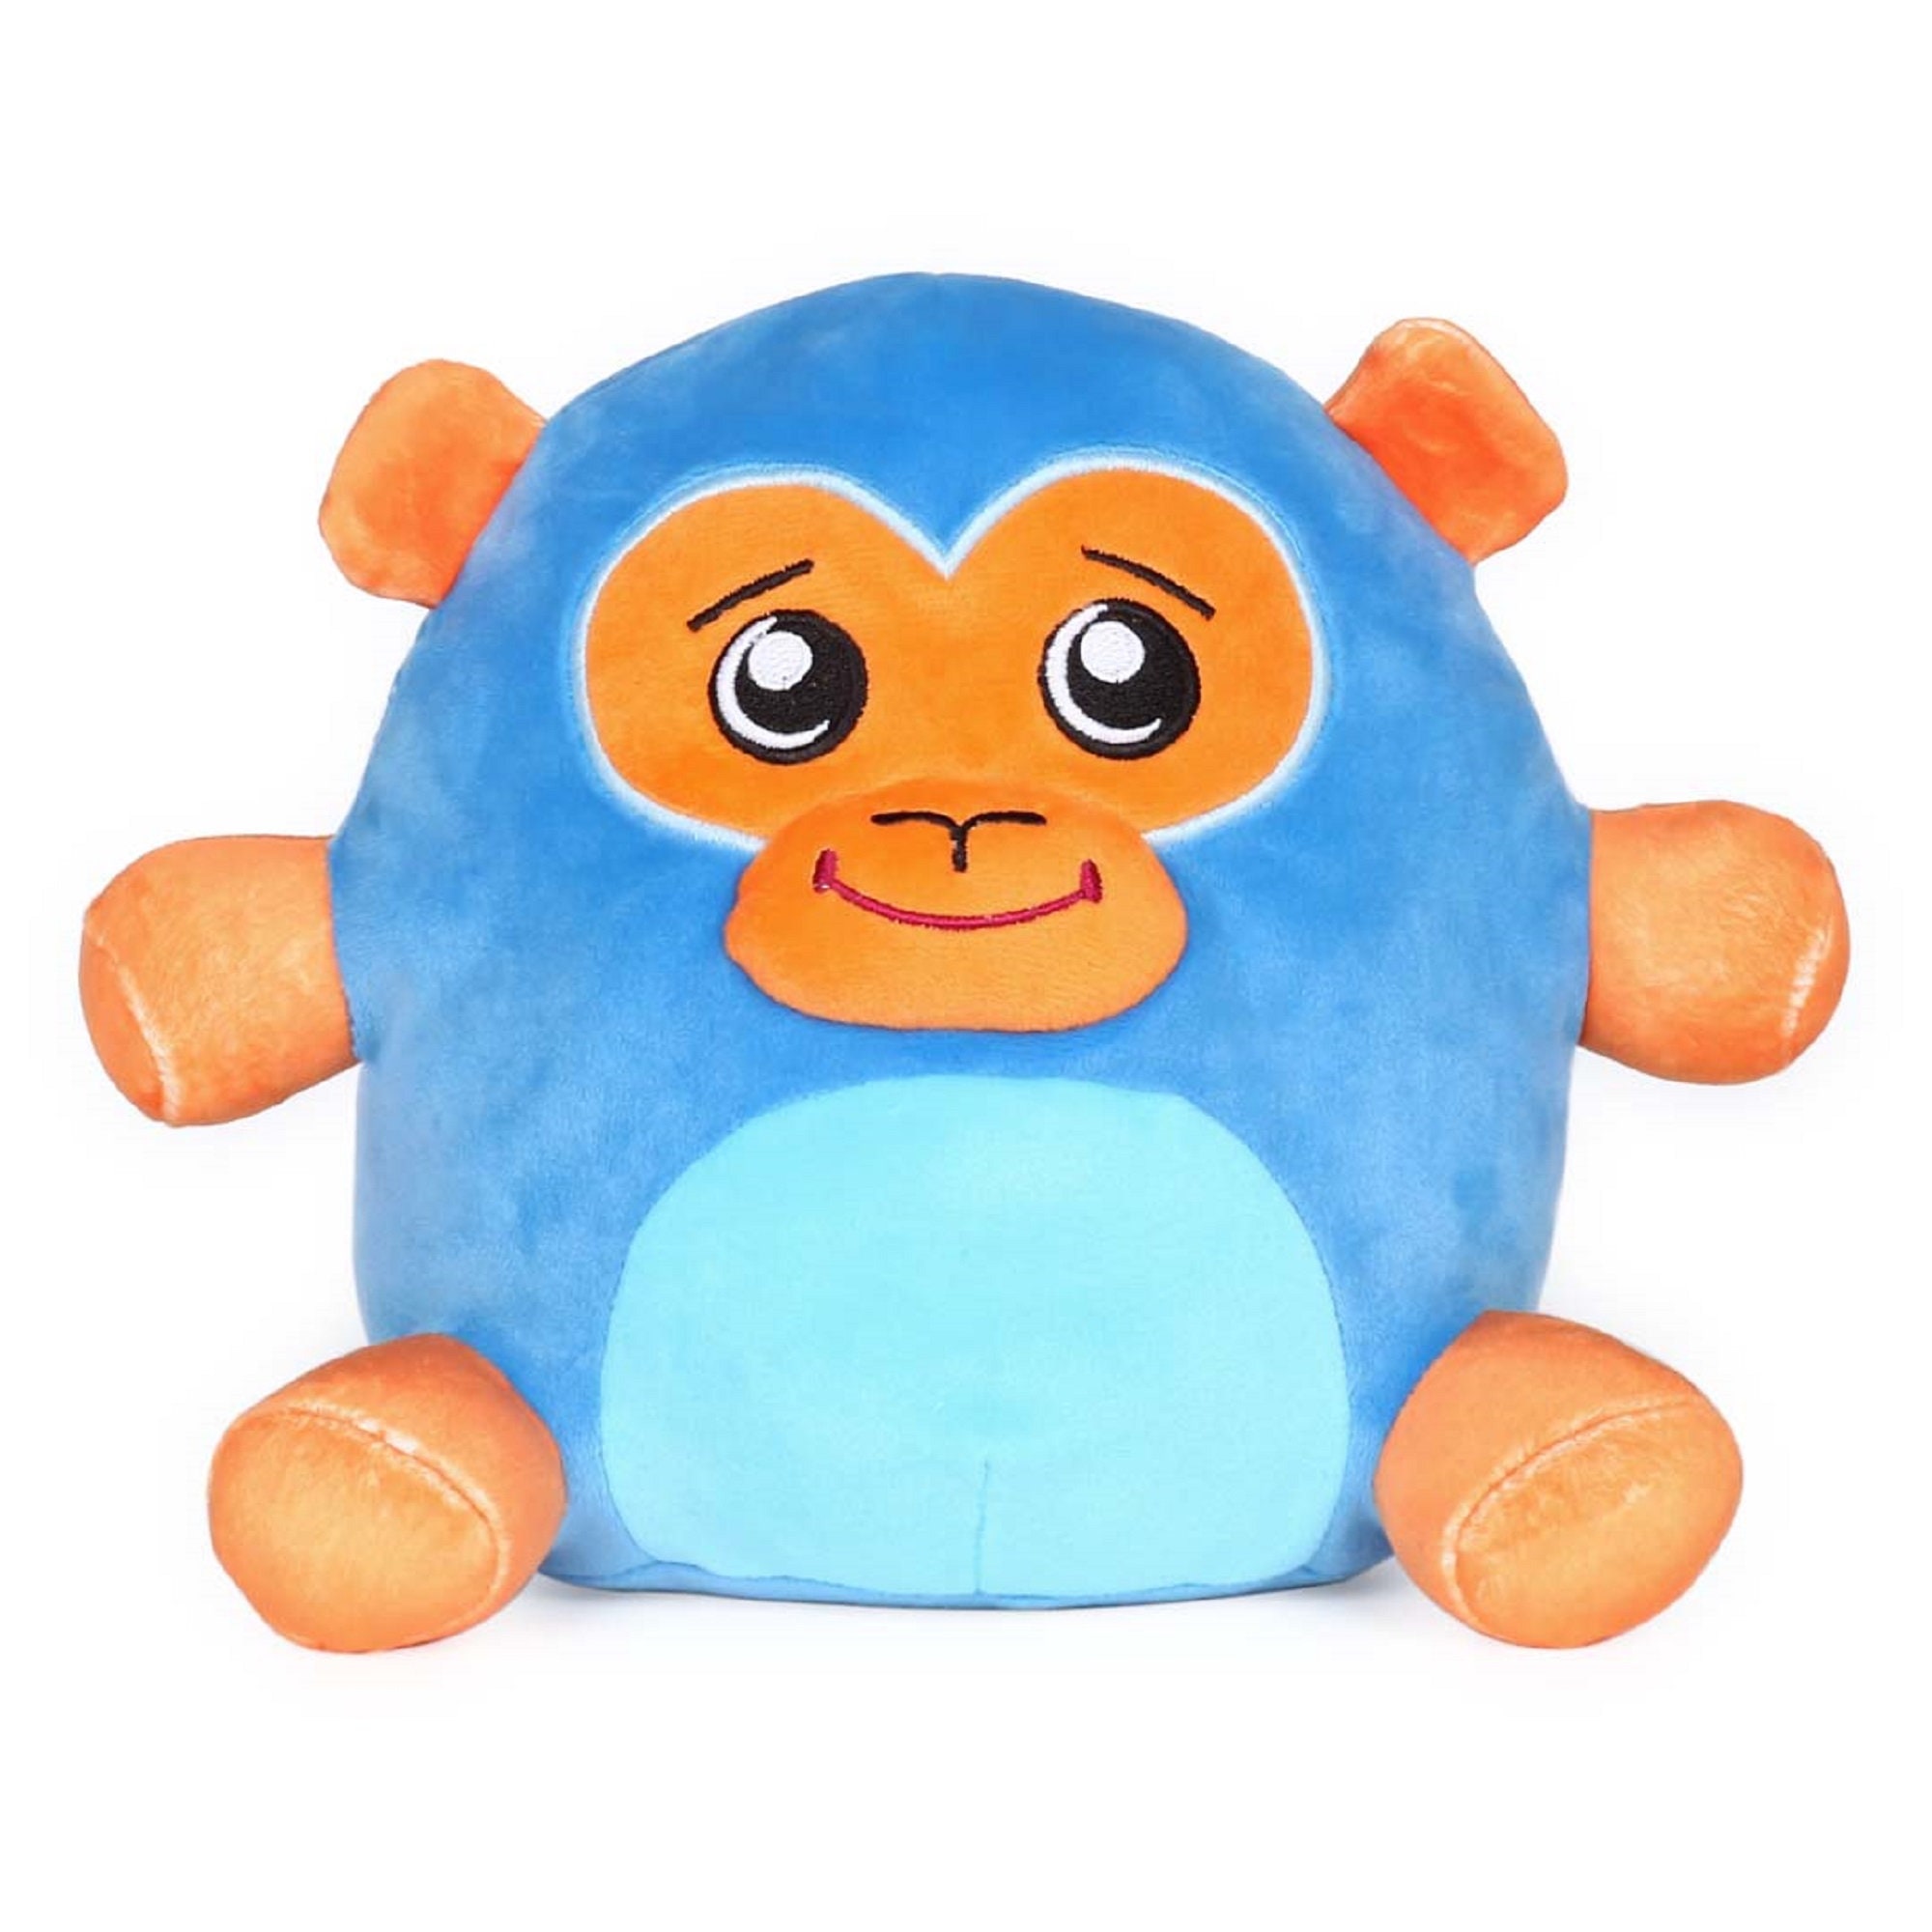 Gorilla Tag Plush Toys Gorilla Tags Stuffed Animal Merch Plush For